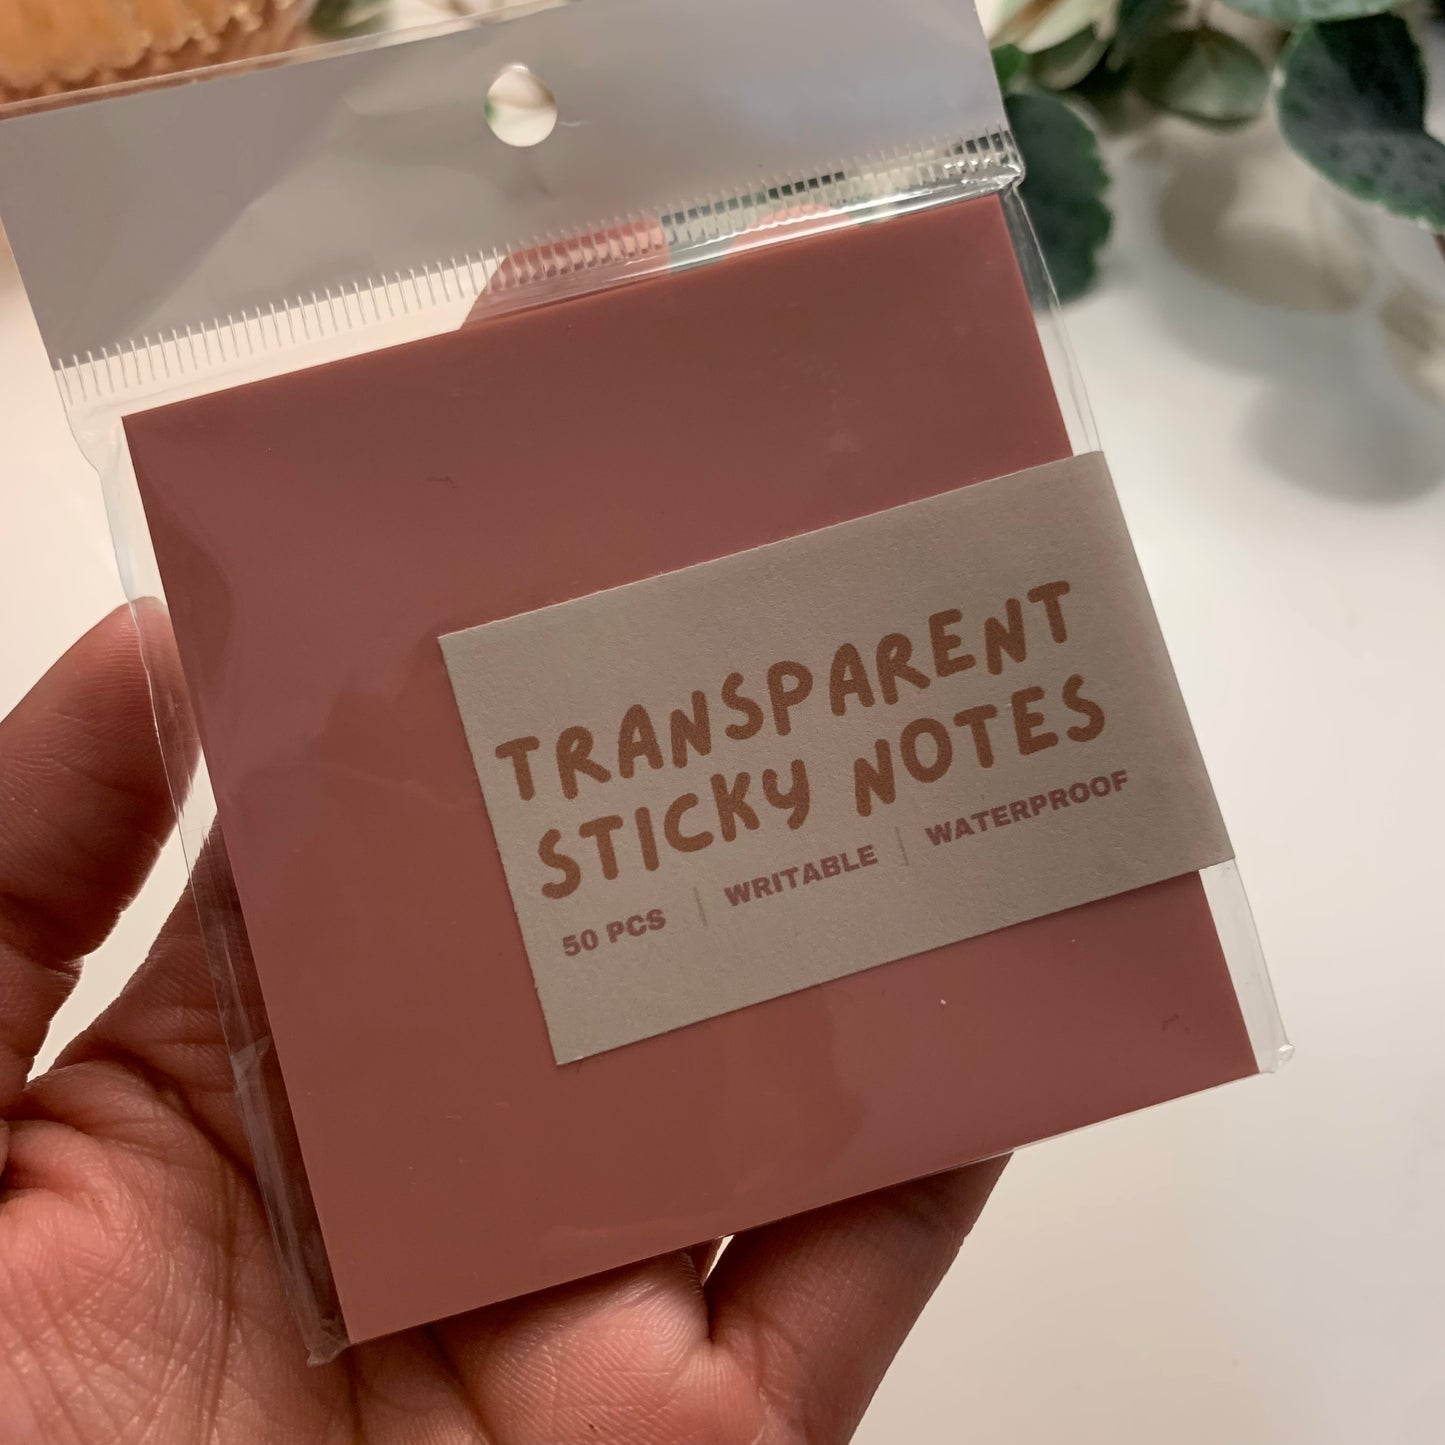 Transparent Sticky Notes - PINK